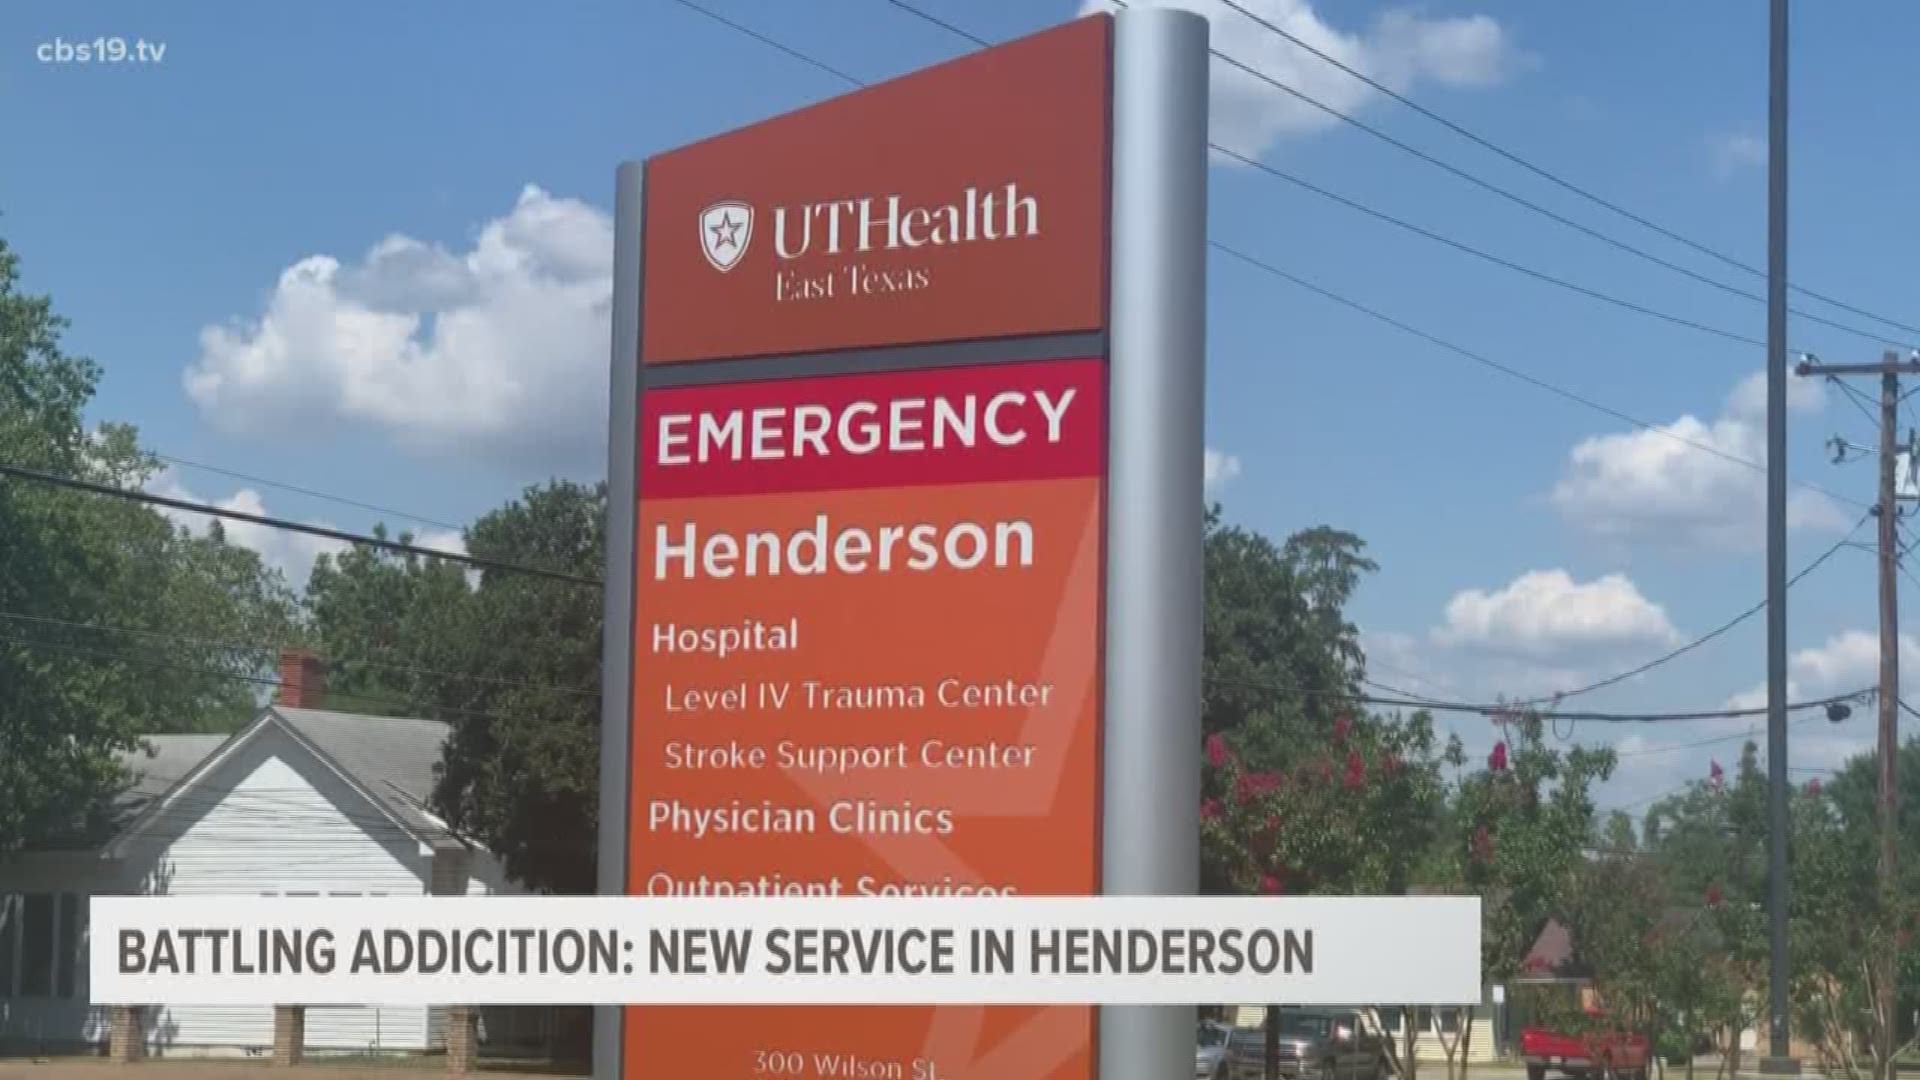 Ut Health Henderson’s new service helps people battle addiction